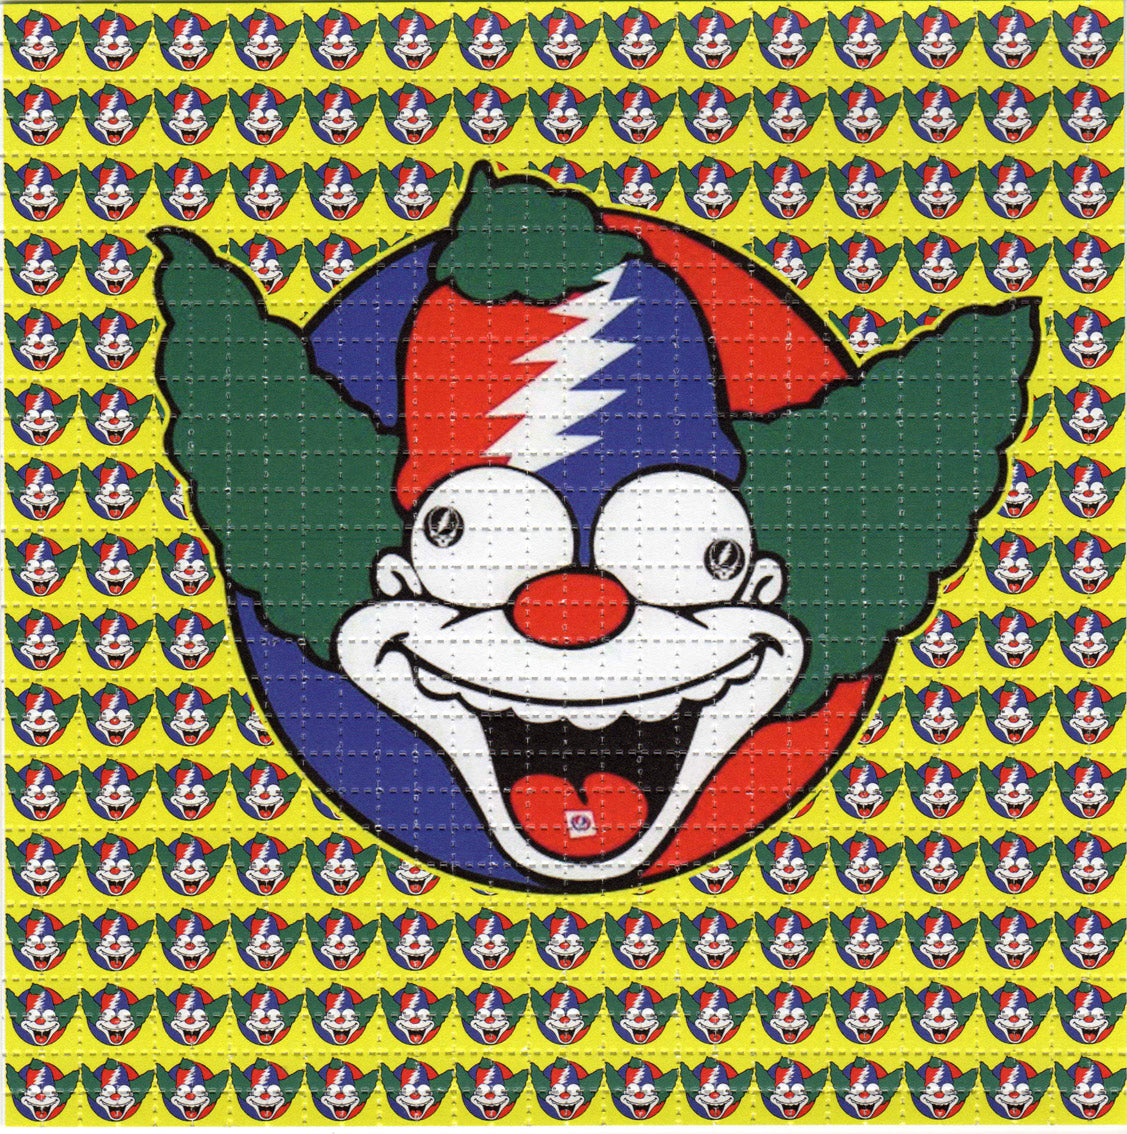 Trippy The Crusty Tabs Clown LSD blotter art print